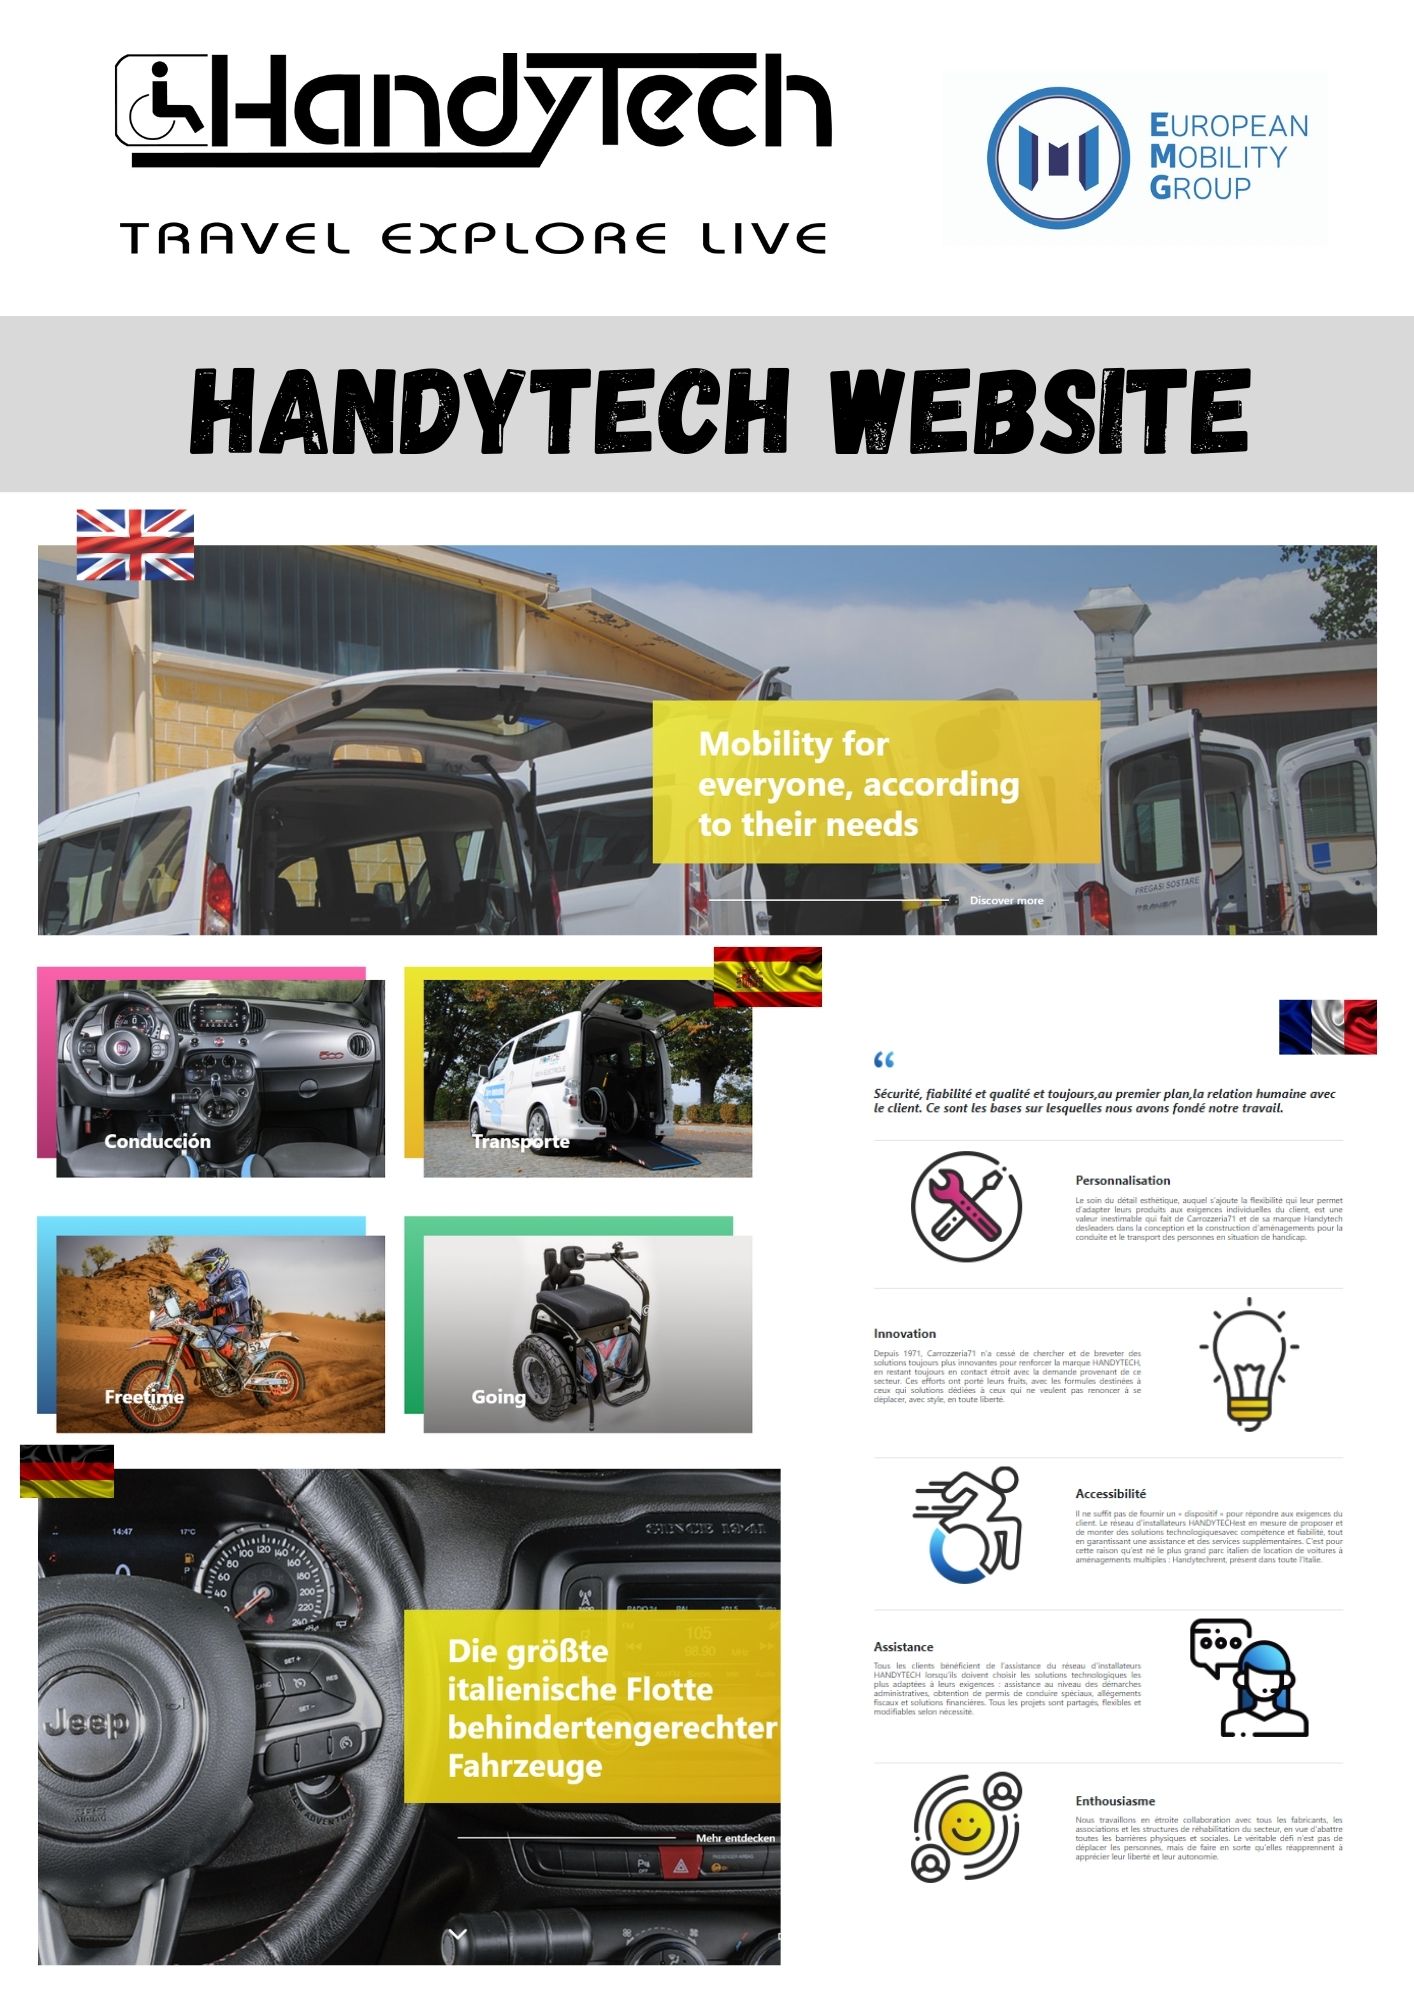 Handytech website image